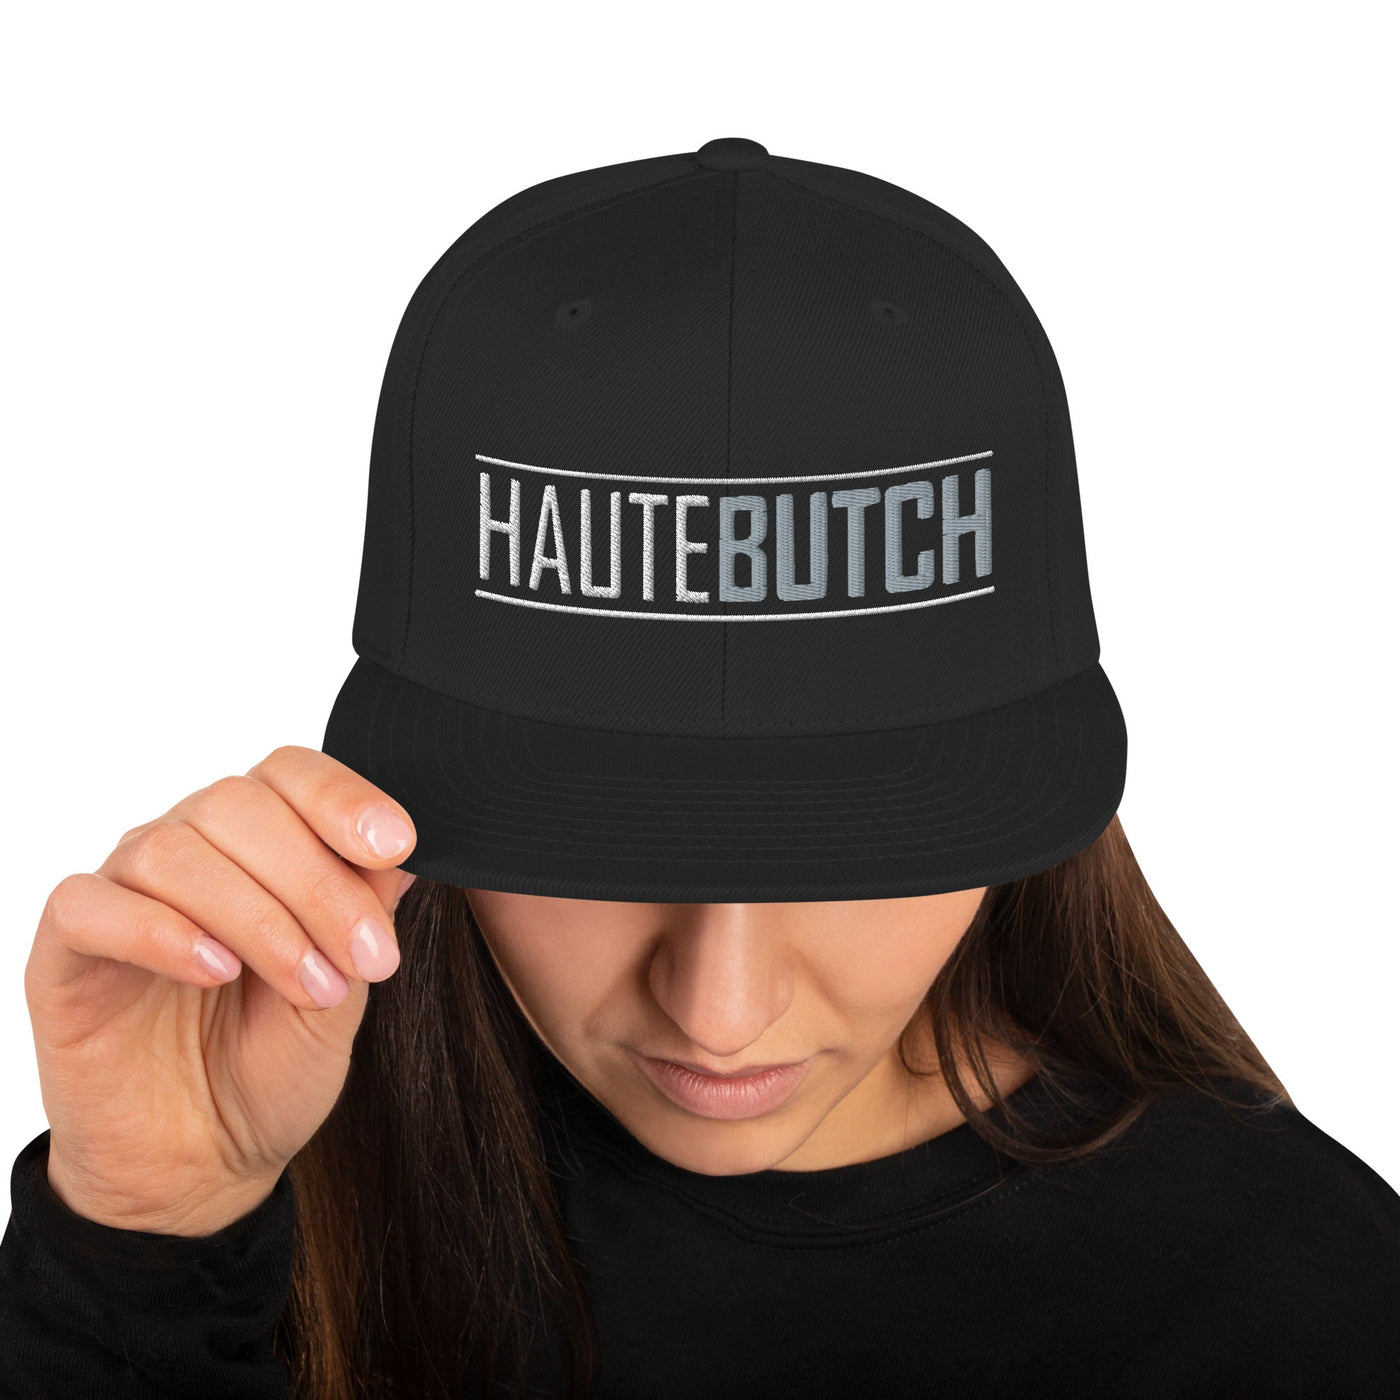 HauteButch Black SnapBack - HAUTEBUTCH - hat, snapback, spo-default, spo-disabled, spo-notify-me-disabled, tomboy